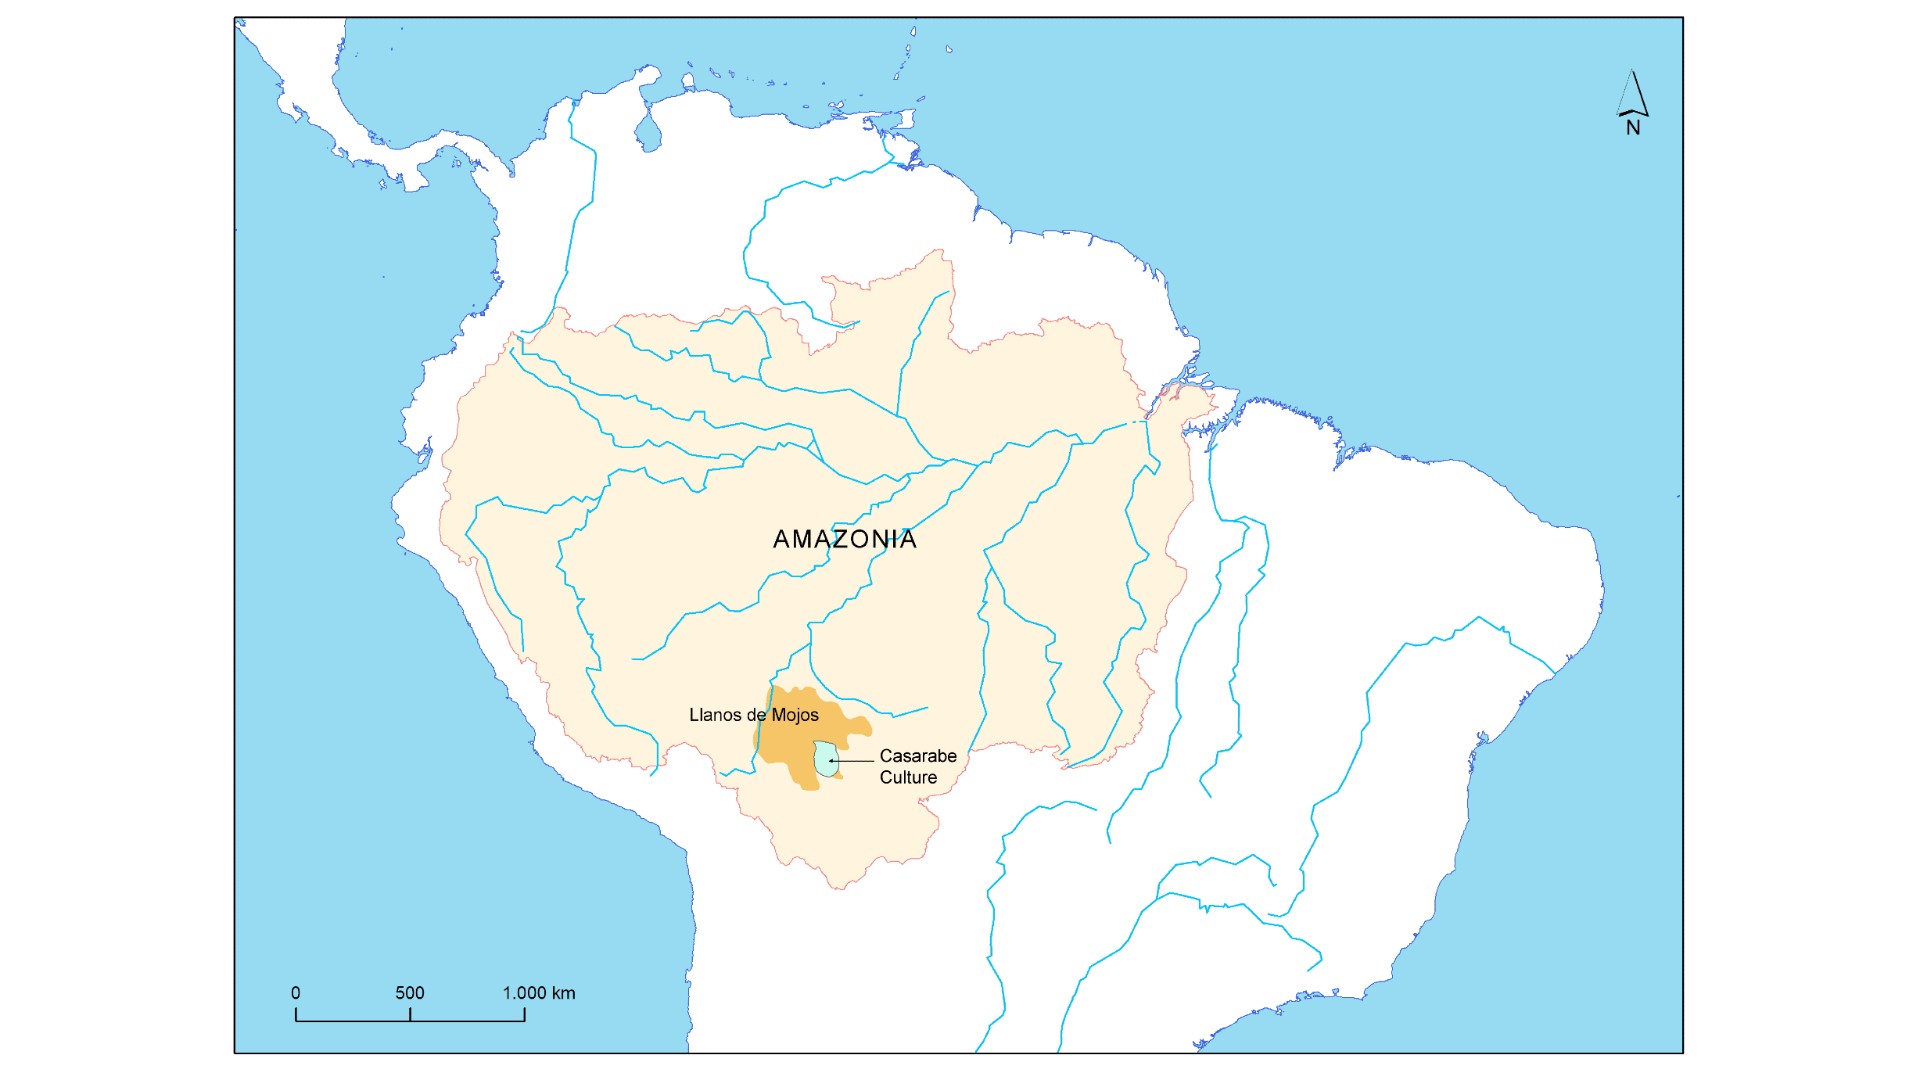 Map of the Llanos de Mojos savannah and the Casarabe Culture area.